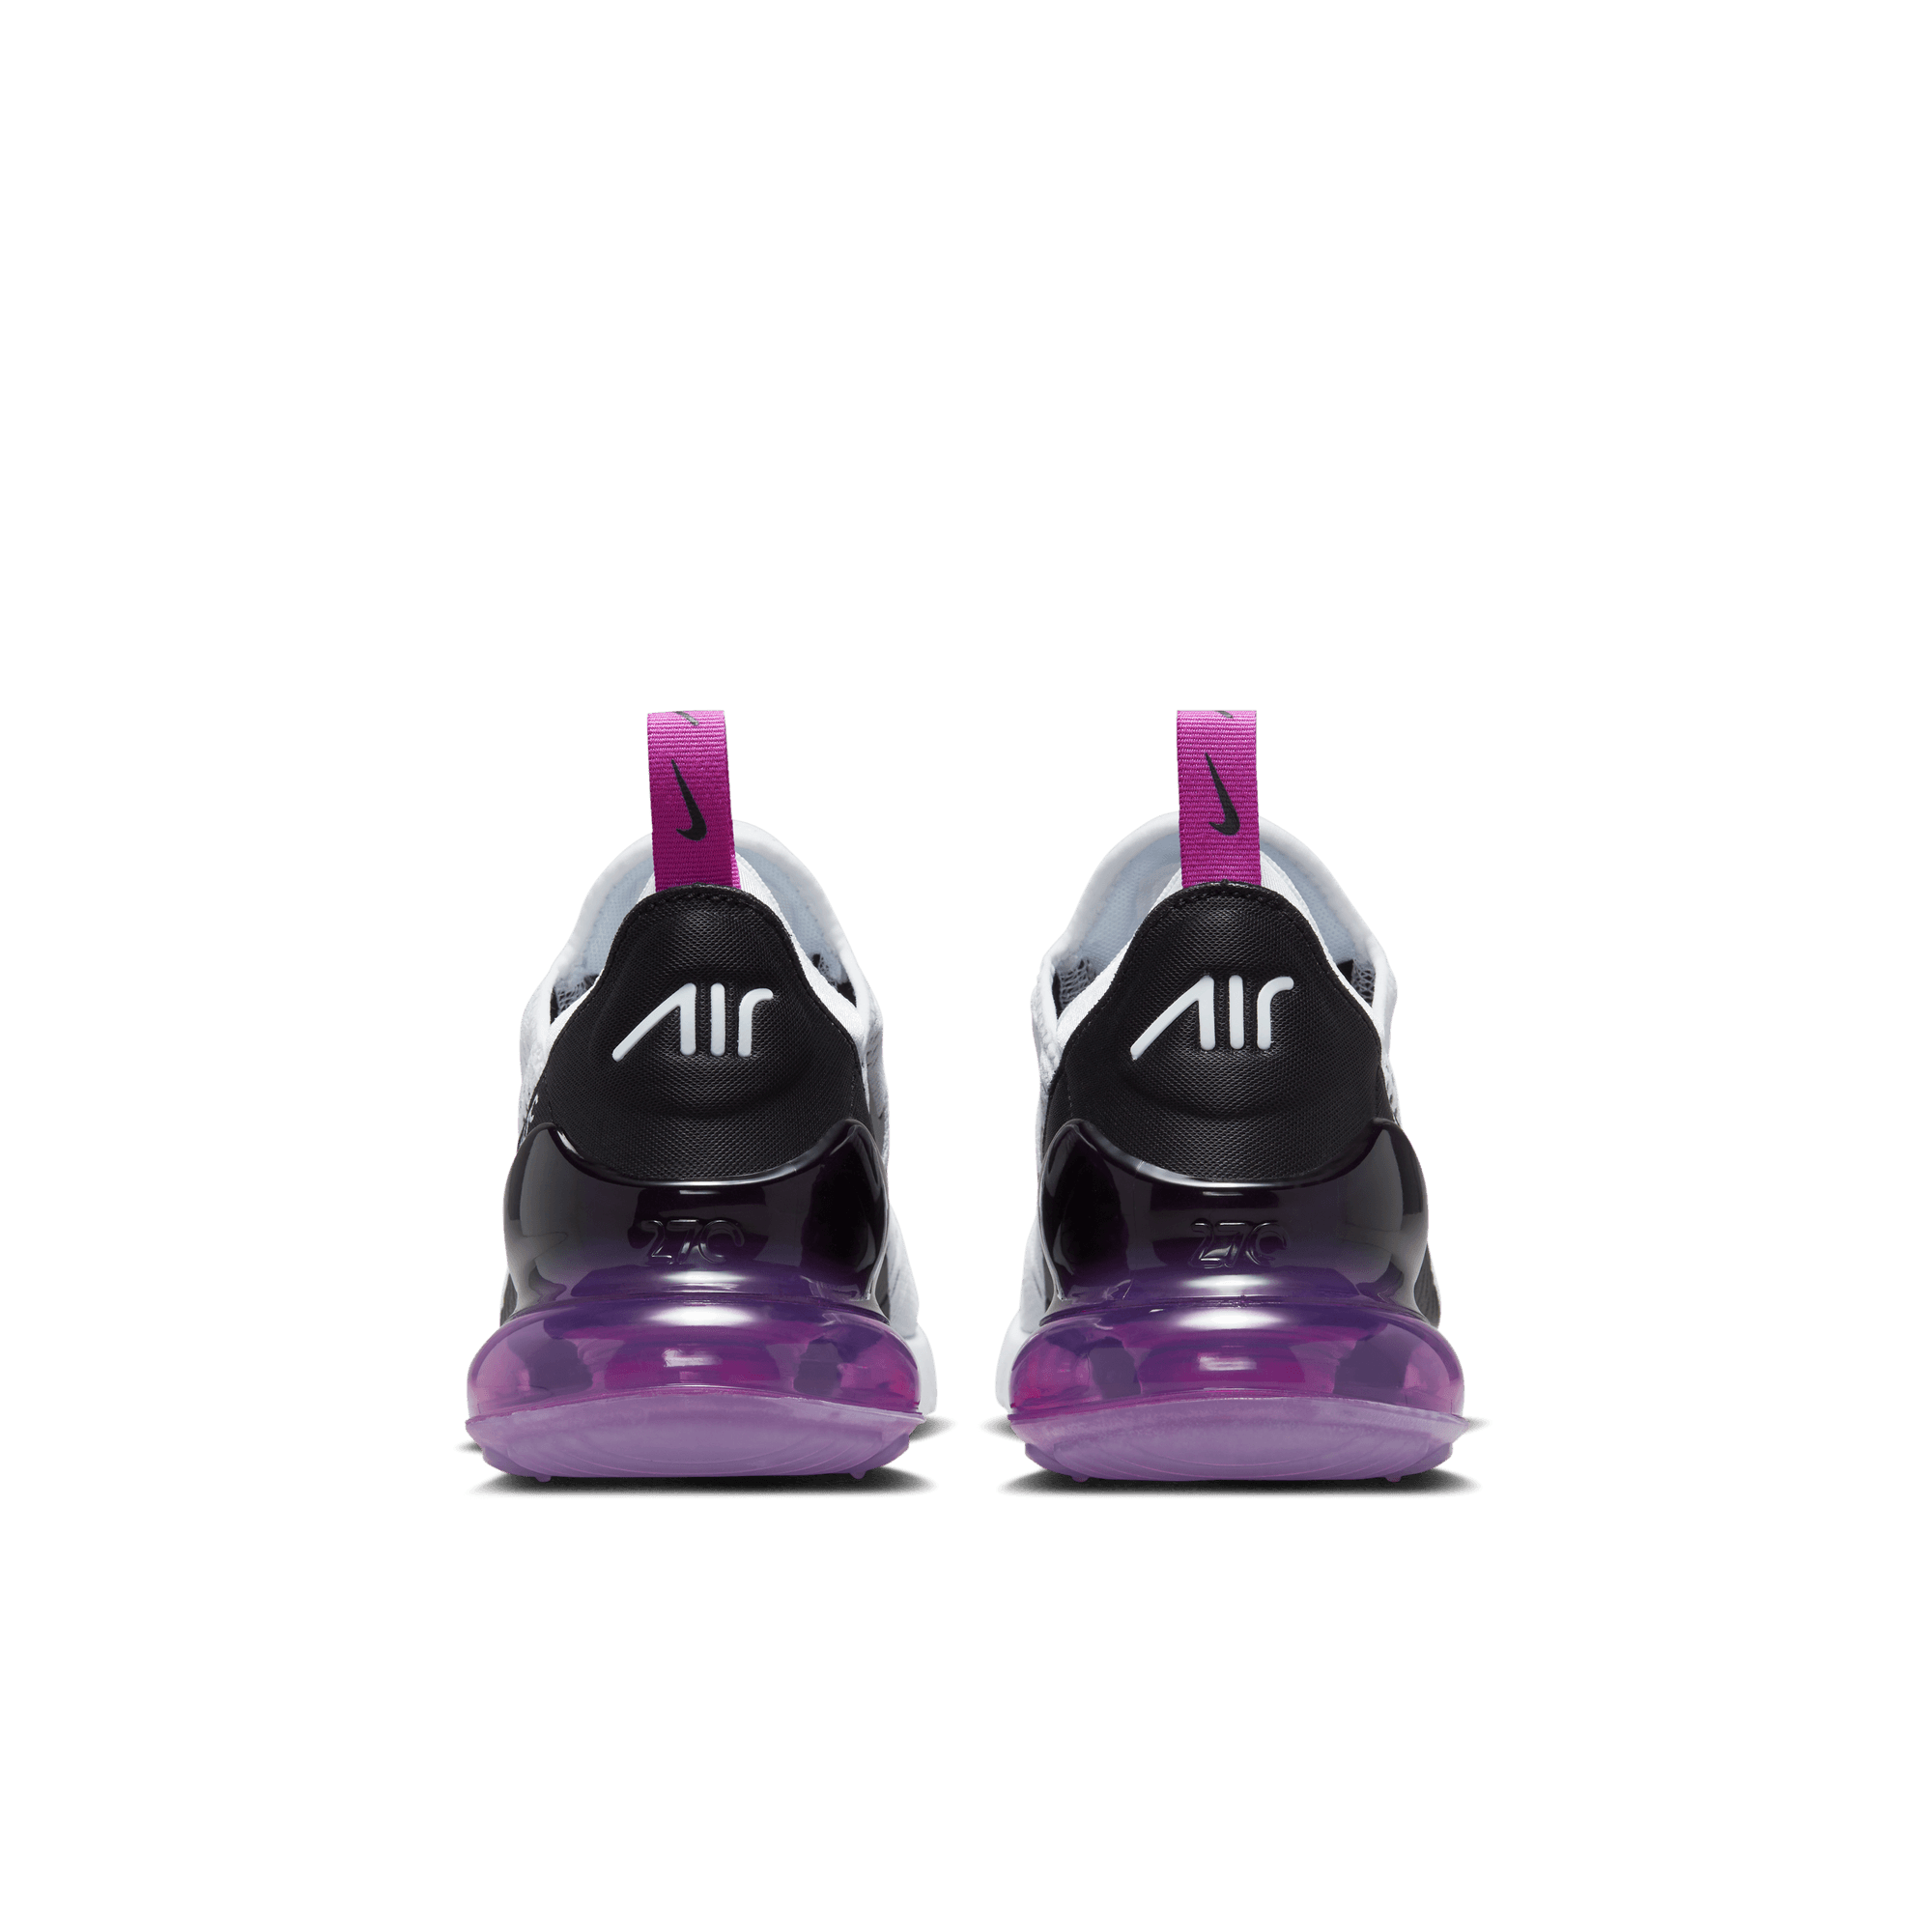 Nike airmax 720 pink - Gem